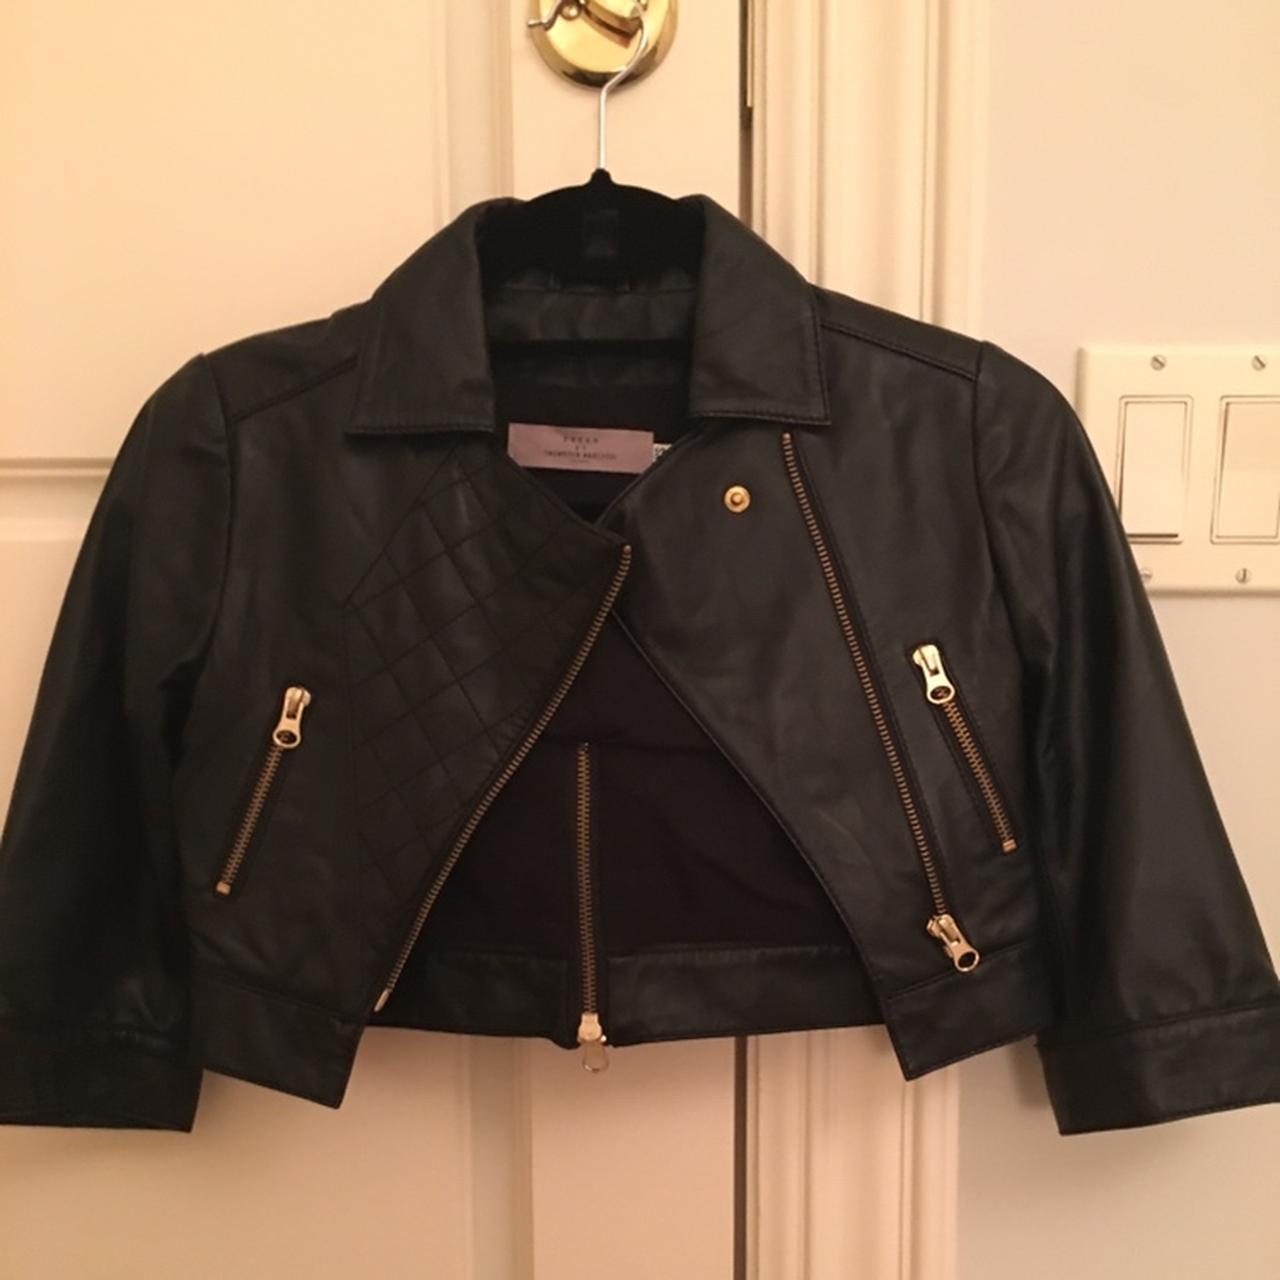 Product Image 1 - Leather cropped jacket fits like